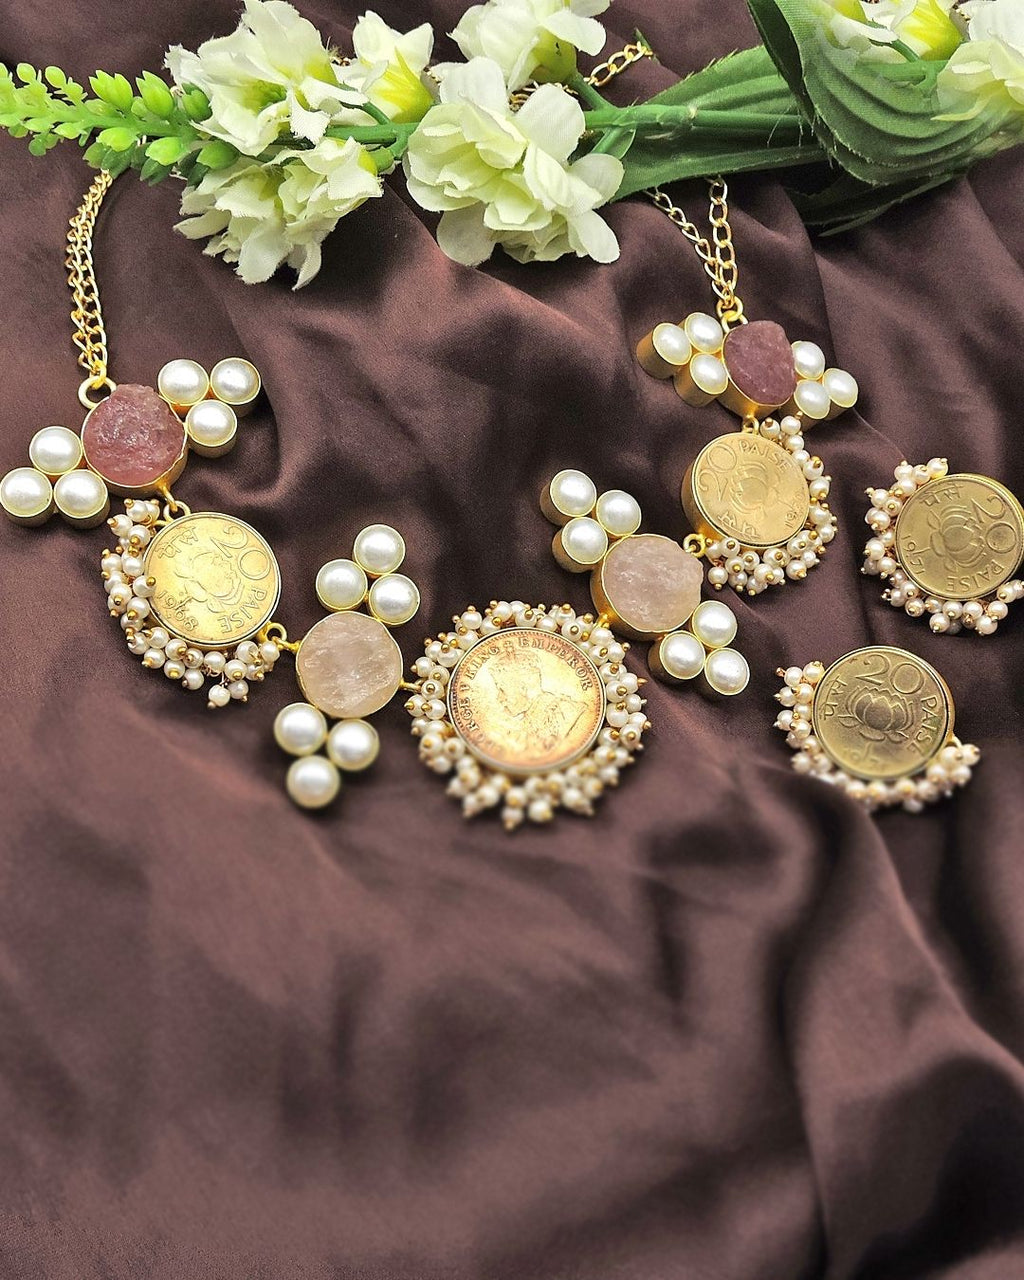 Padra Necklace in Strawberry Quartz - Necklaces - Handcrafted Jewellery - Made in India - Dubai Jewellery, Fashion & Lifestyle - Dori